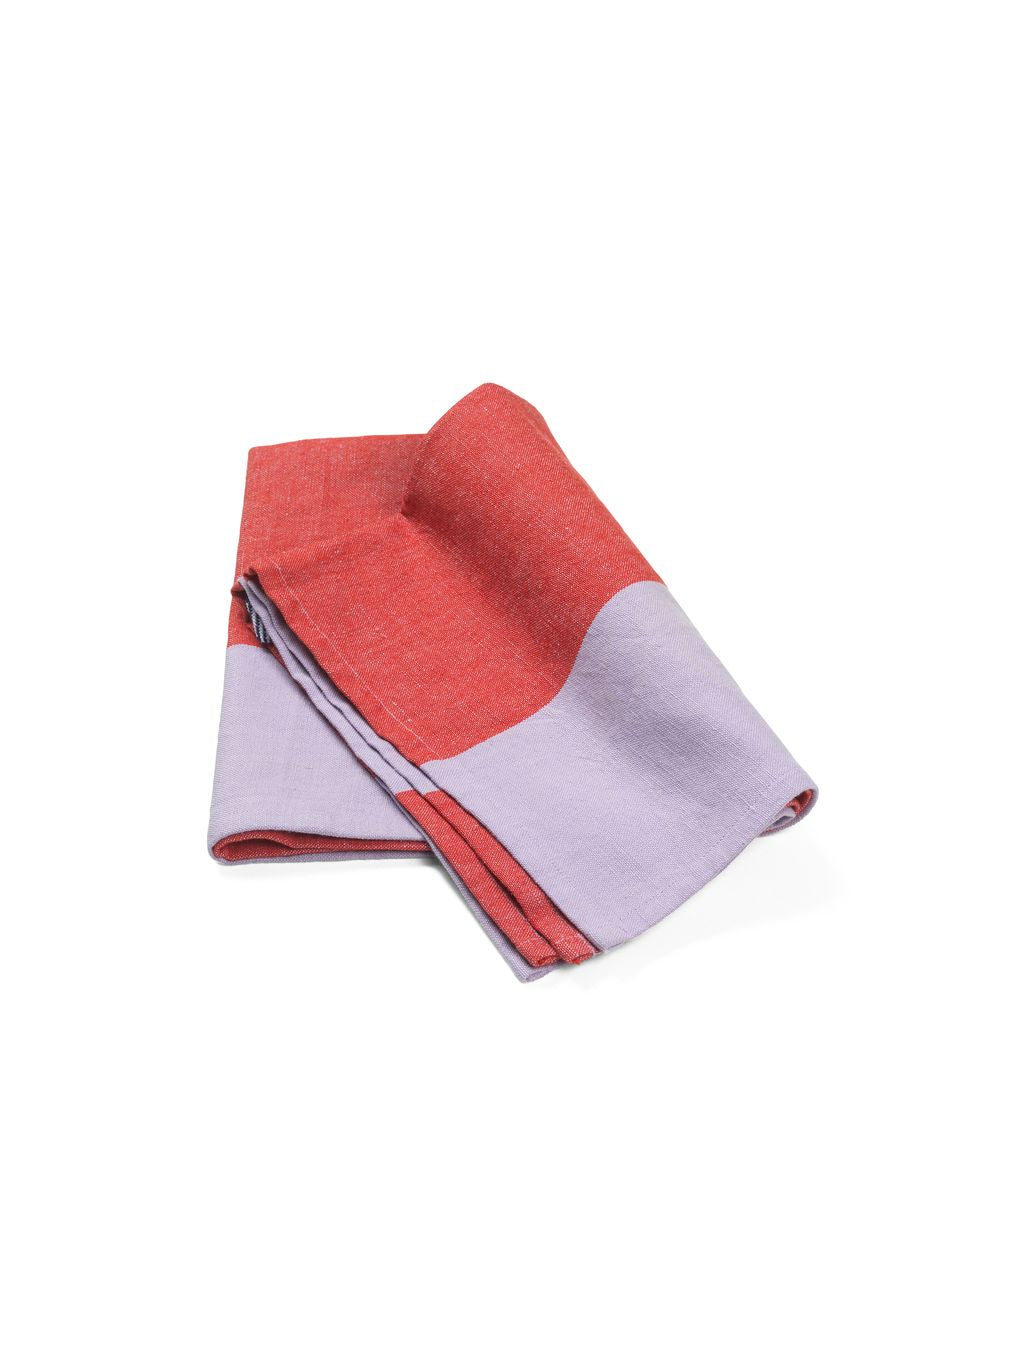 Ferm Living Hale te håndklæde, rød/lilla